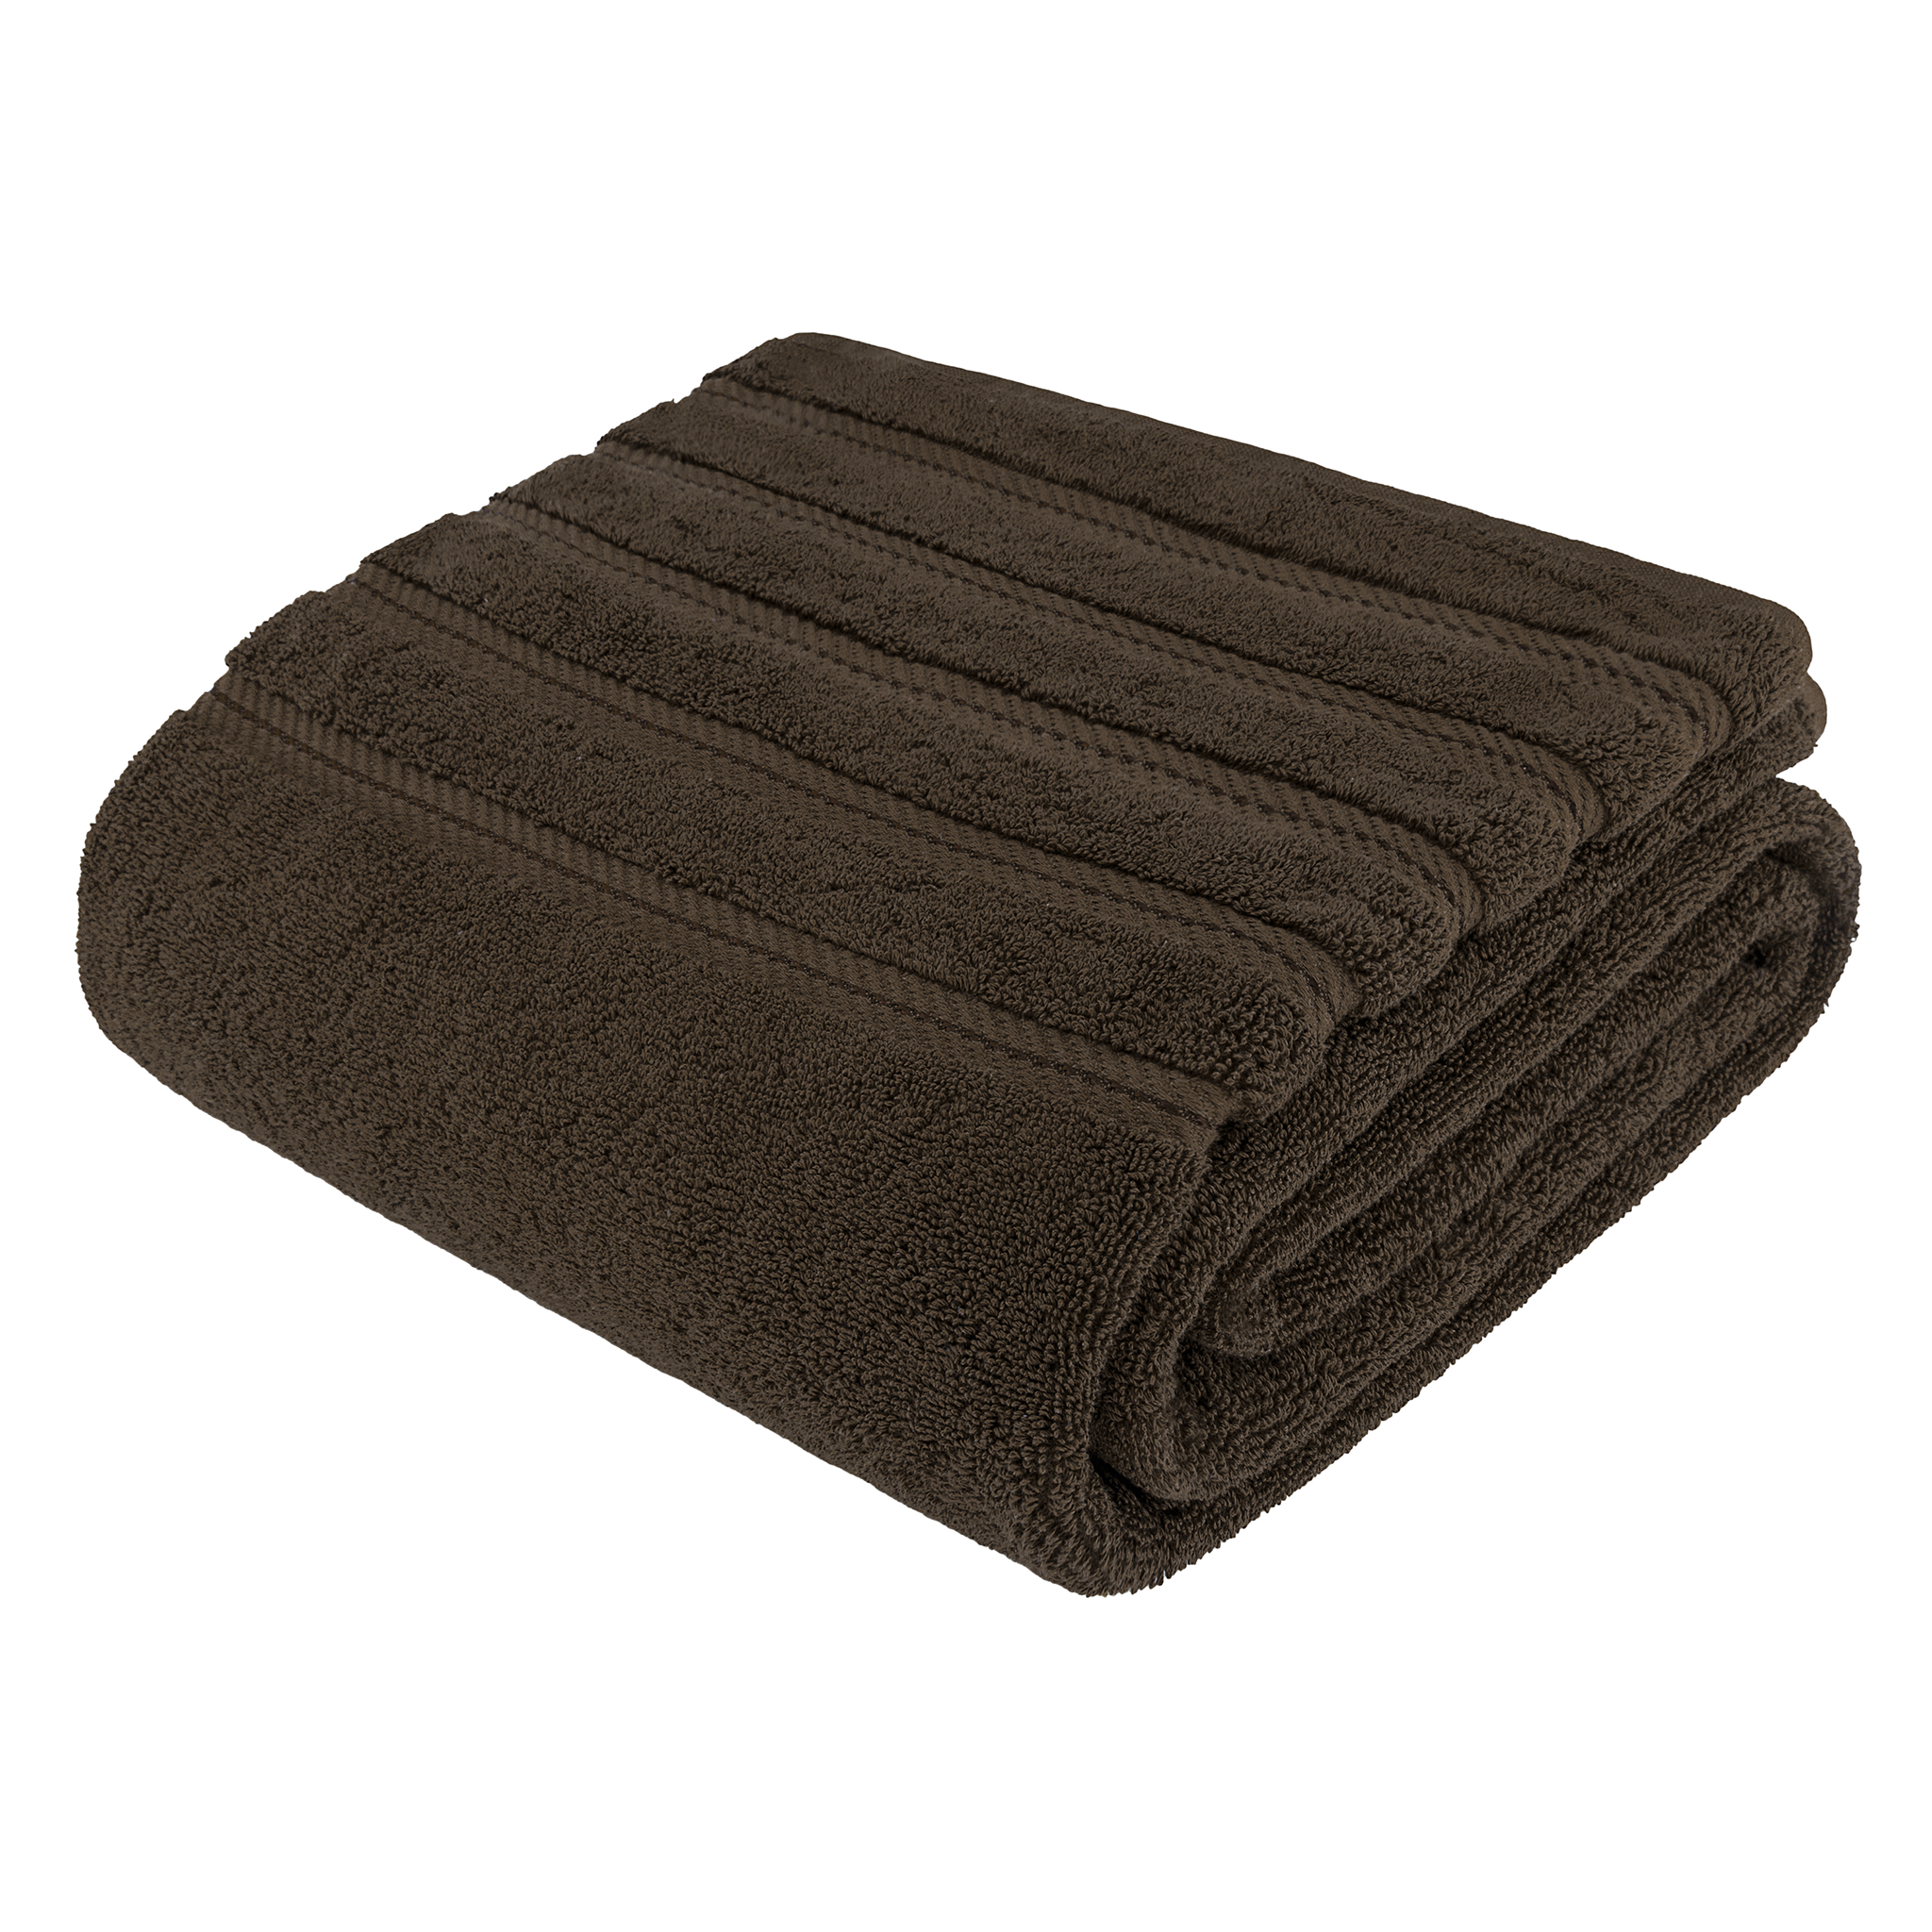 American Soft Linen - 35x70 Jumbo Bath Sheet Turkish Bath Towel - 16 Piece Case Pack - Chocolate-Brown - 7